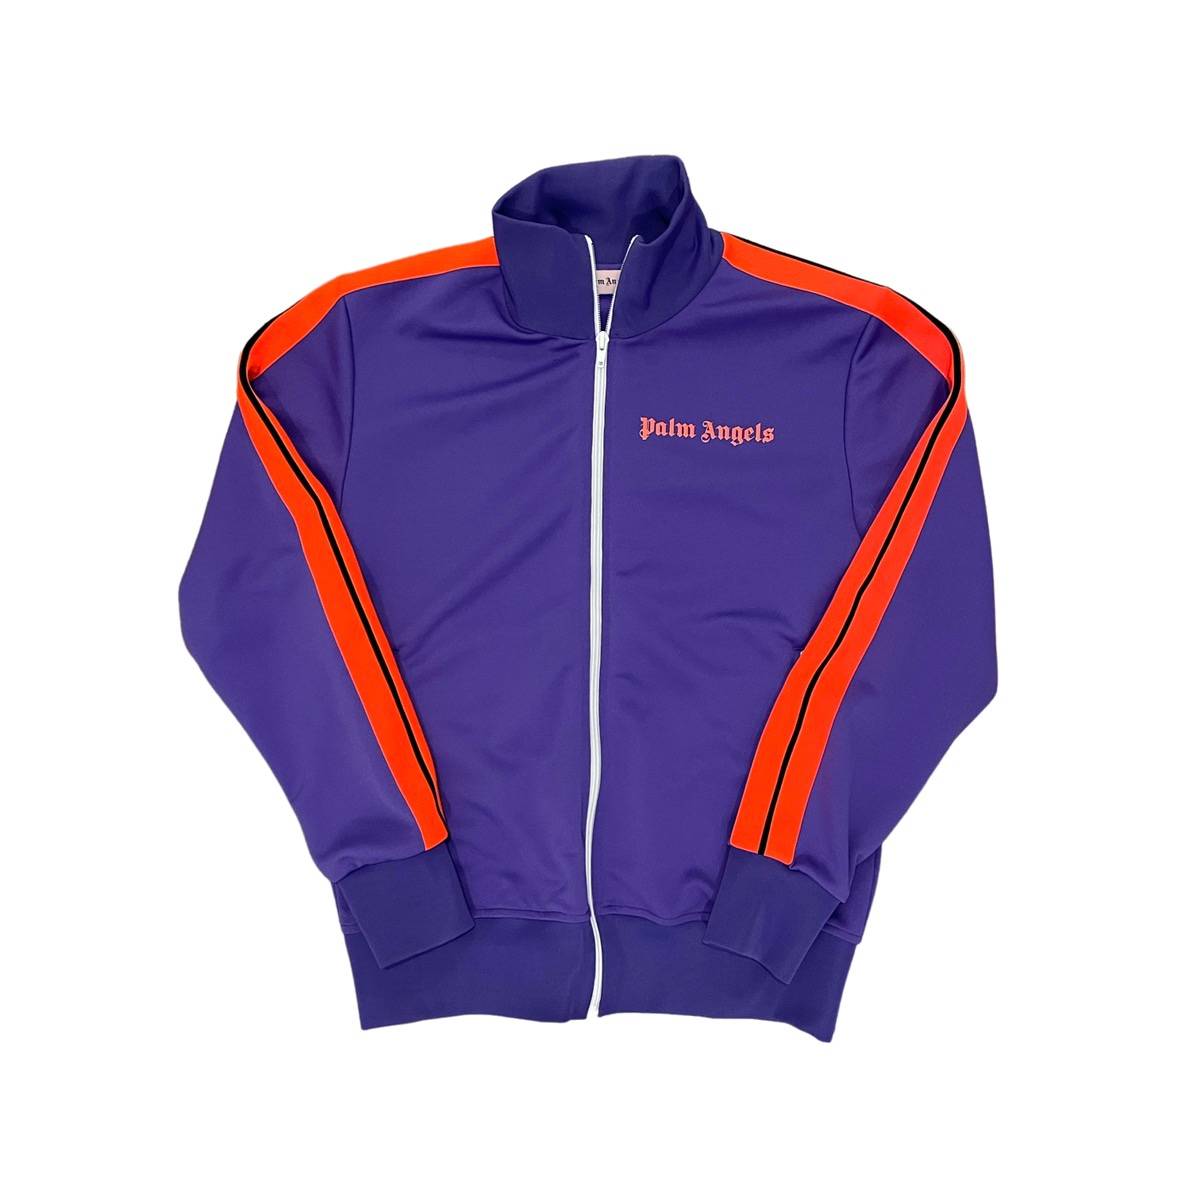 Palm Angels Track Jacket Purple/Orange